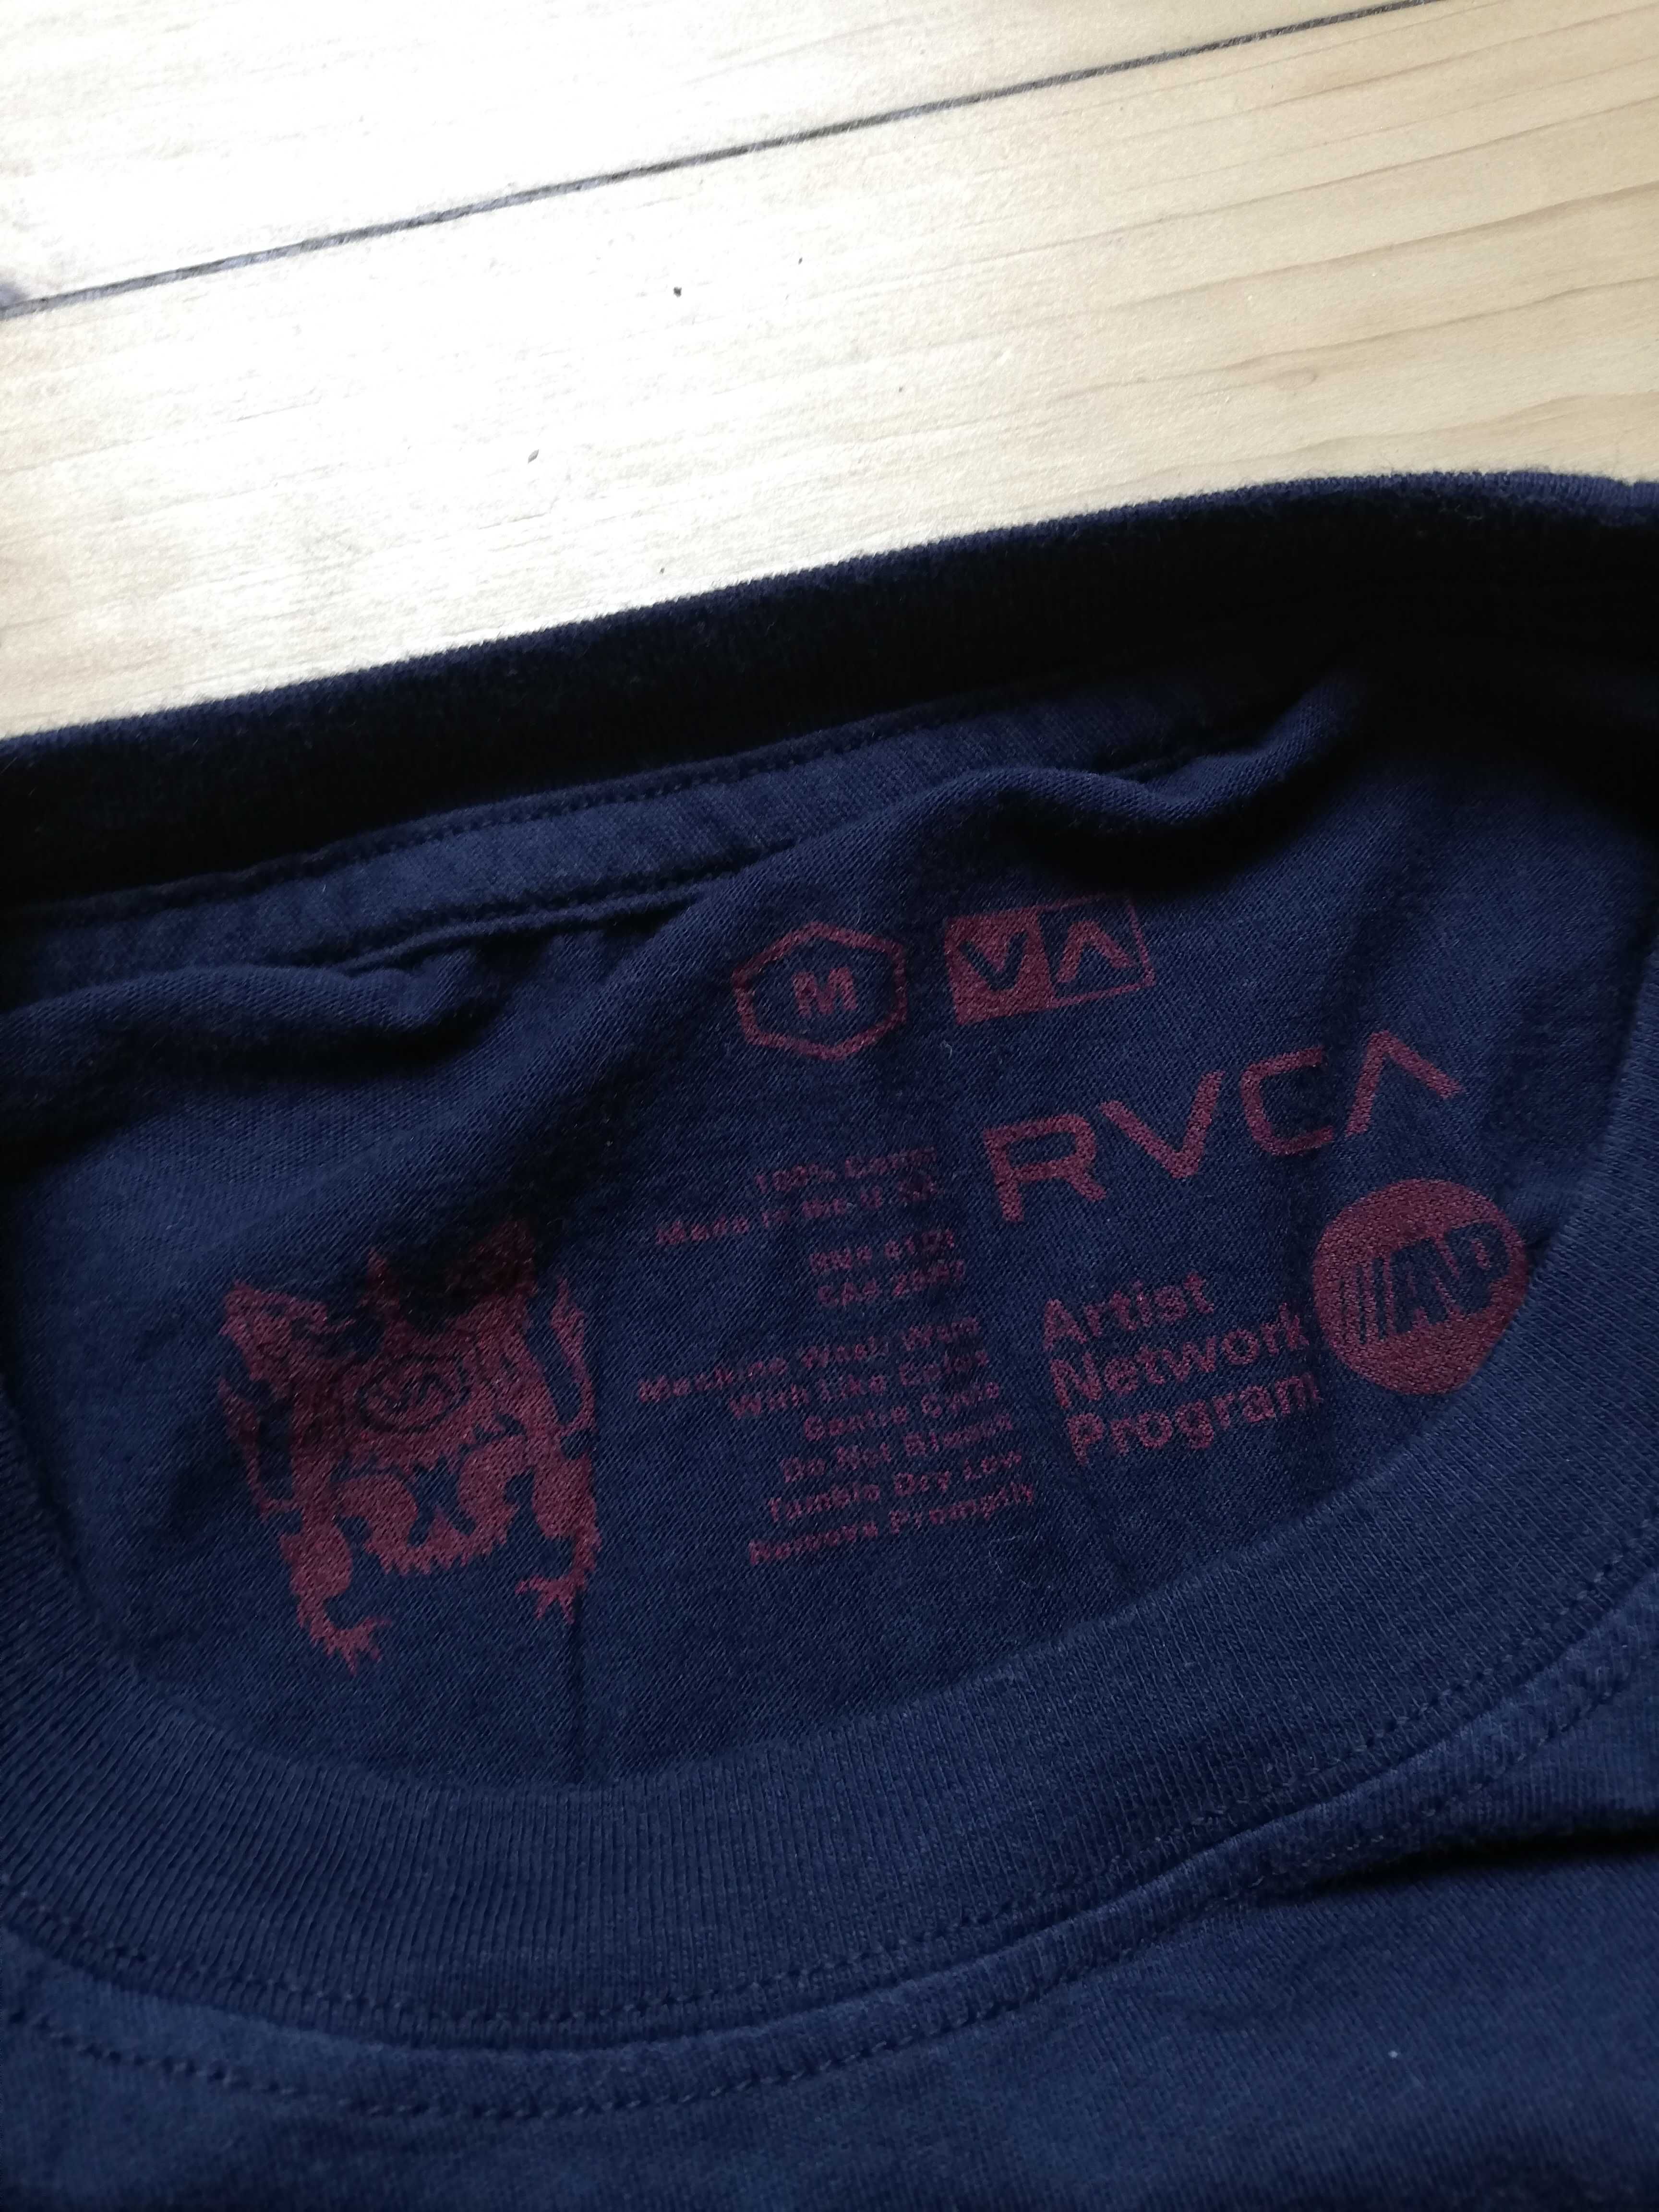 RVCA - Artist Network Program - Size M - New - 100% Cotton